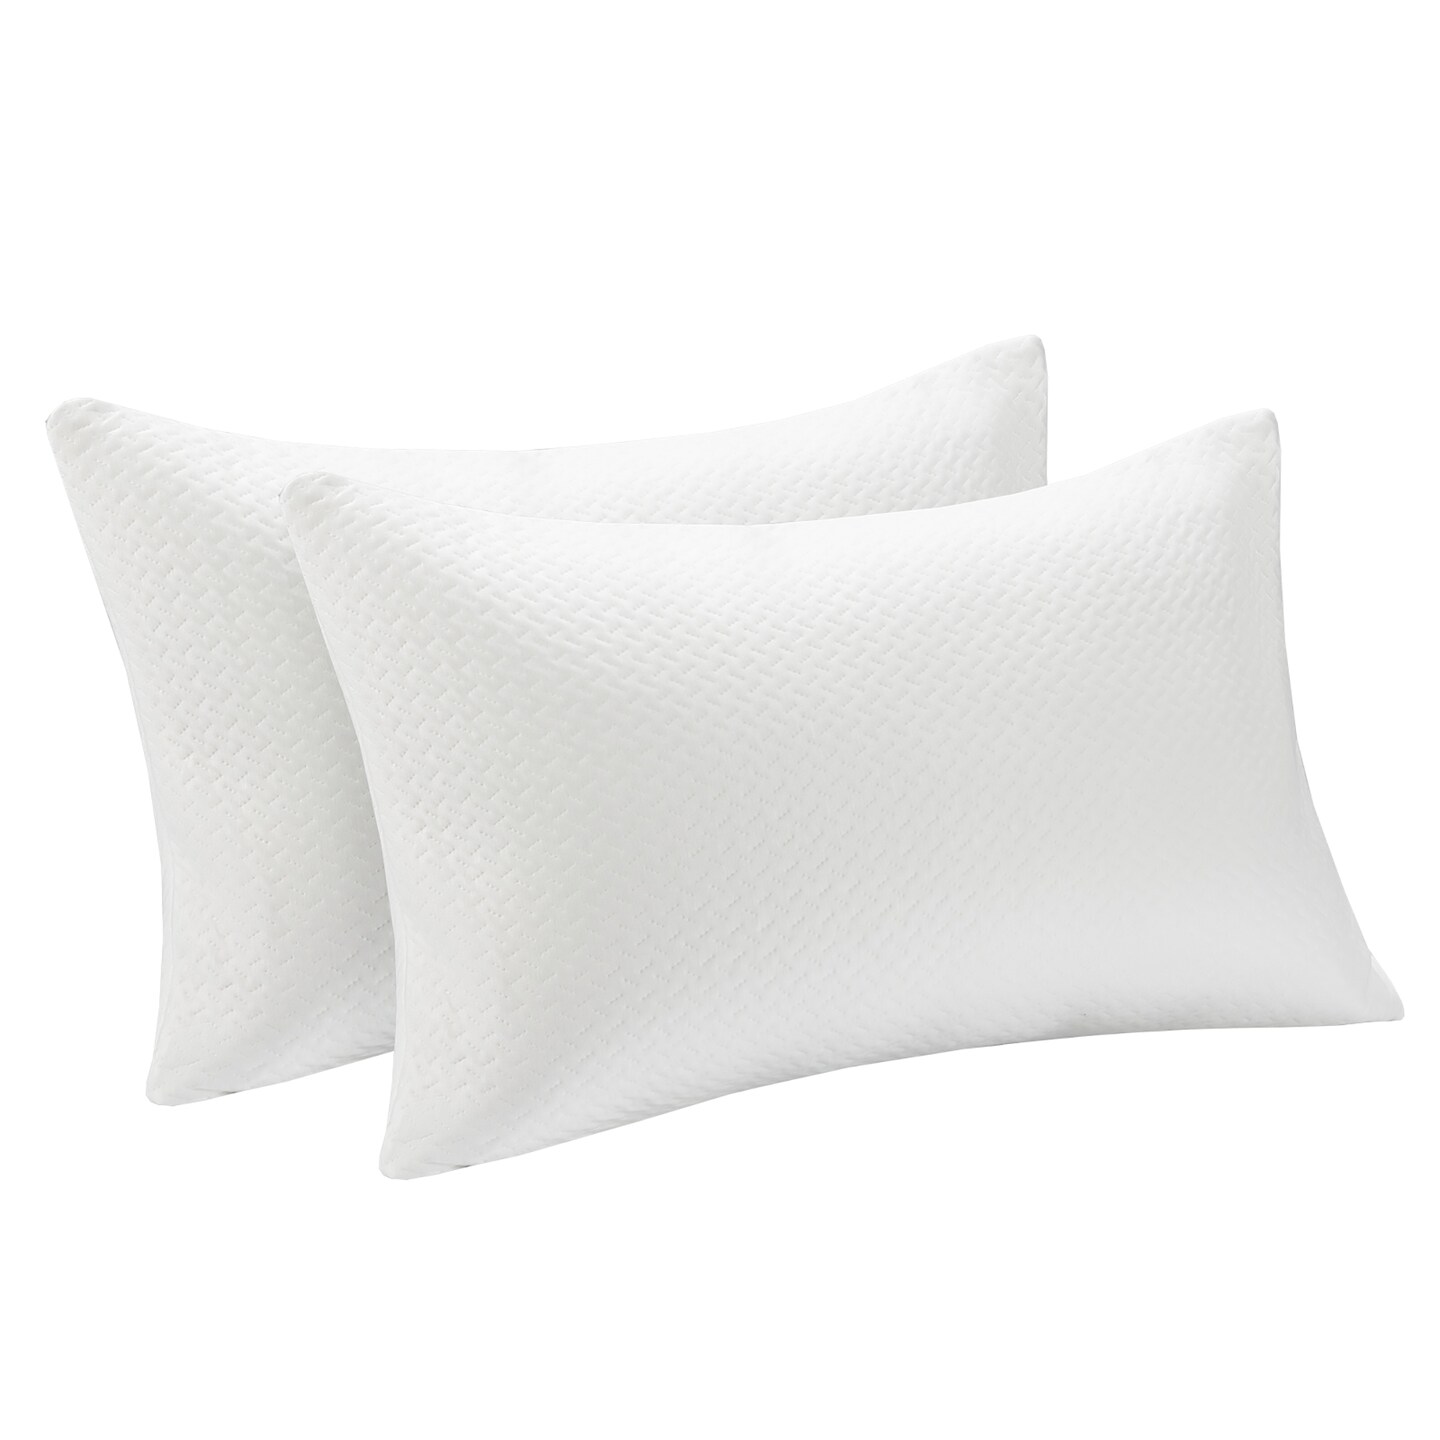 2 Pack Shredded Memory Foam Bed Pillows for Sleeping Cooling